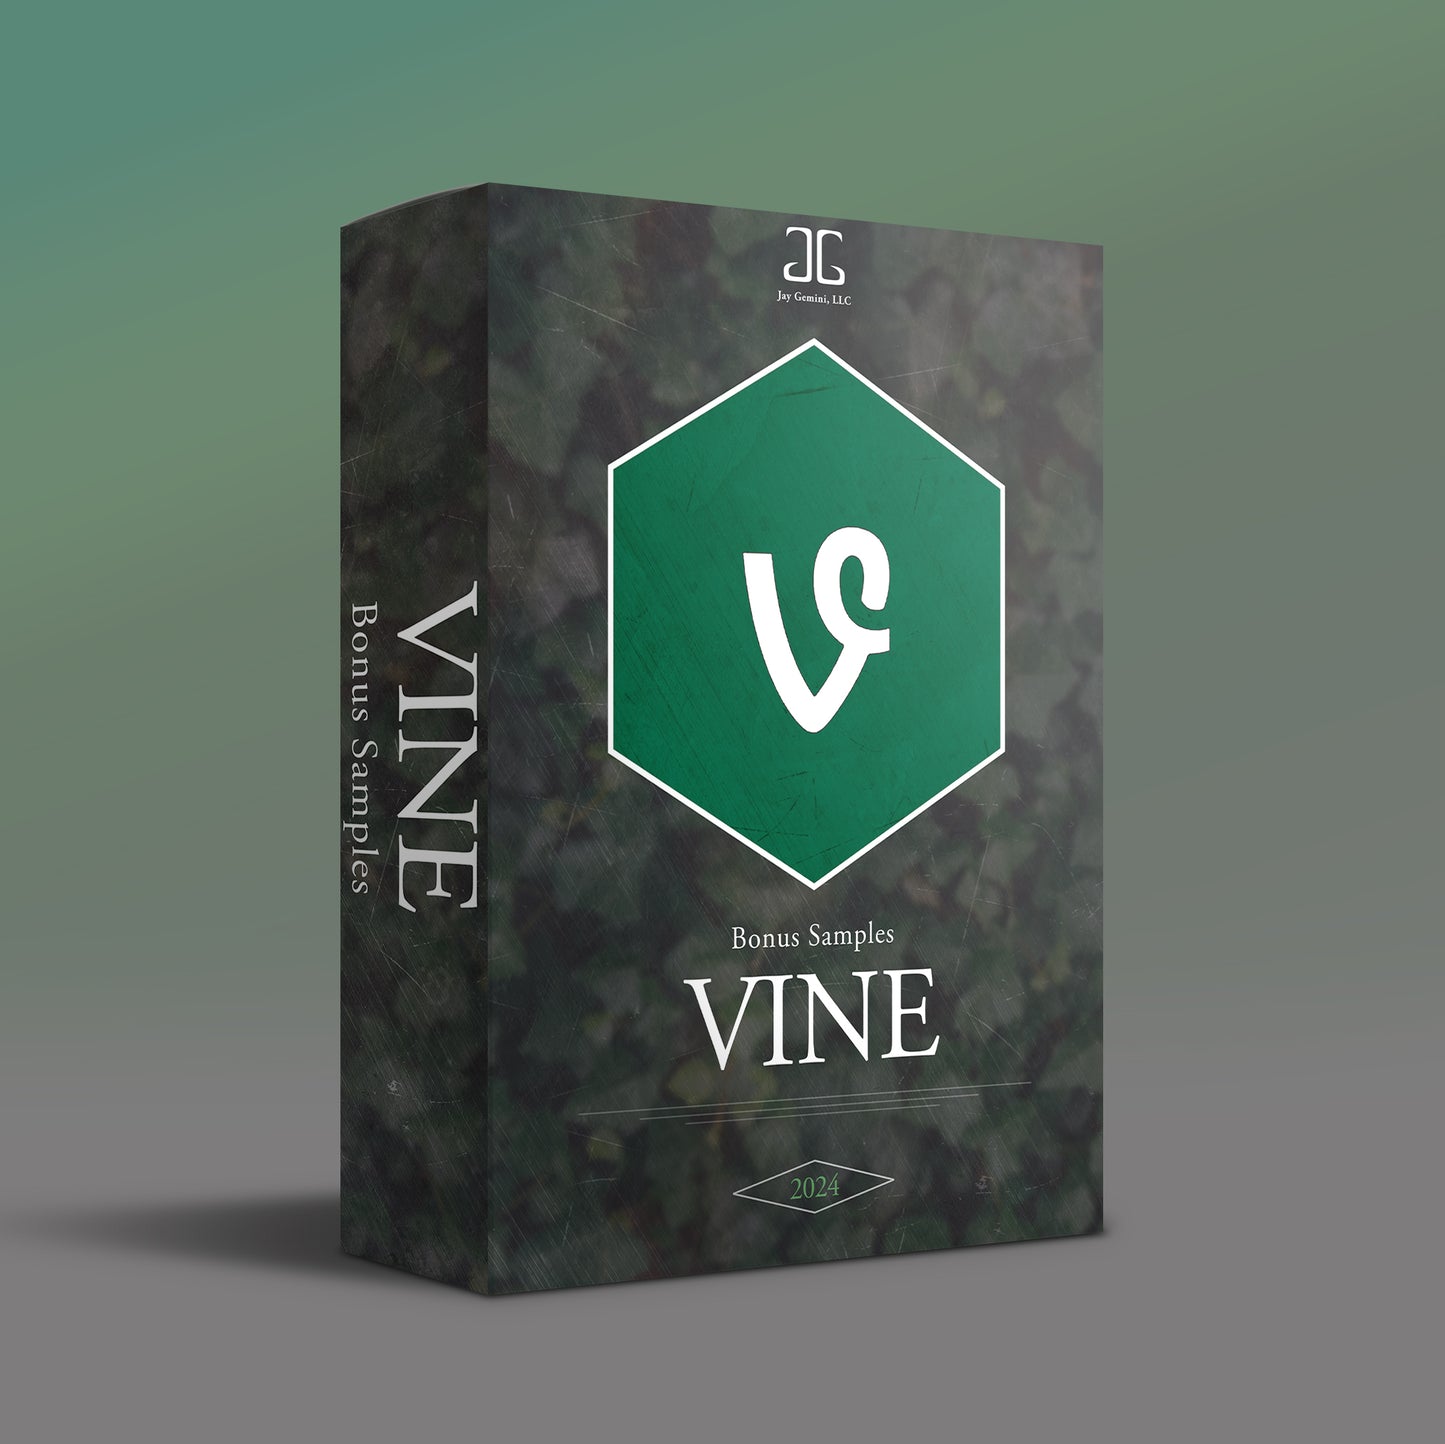 Vines and Bonus Zamples